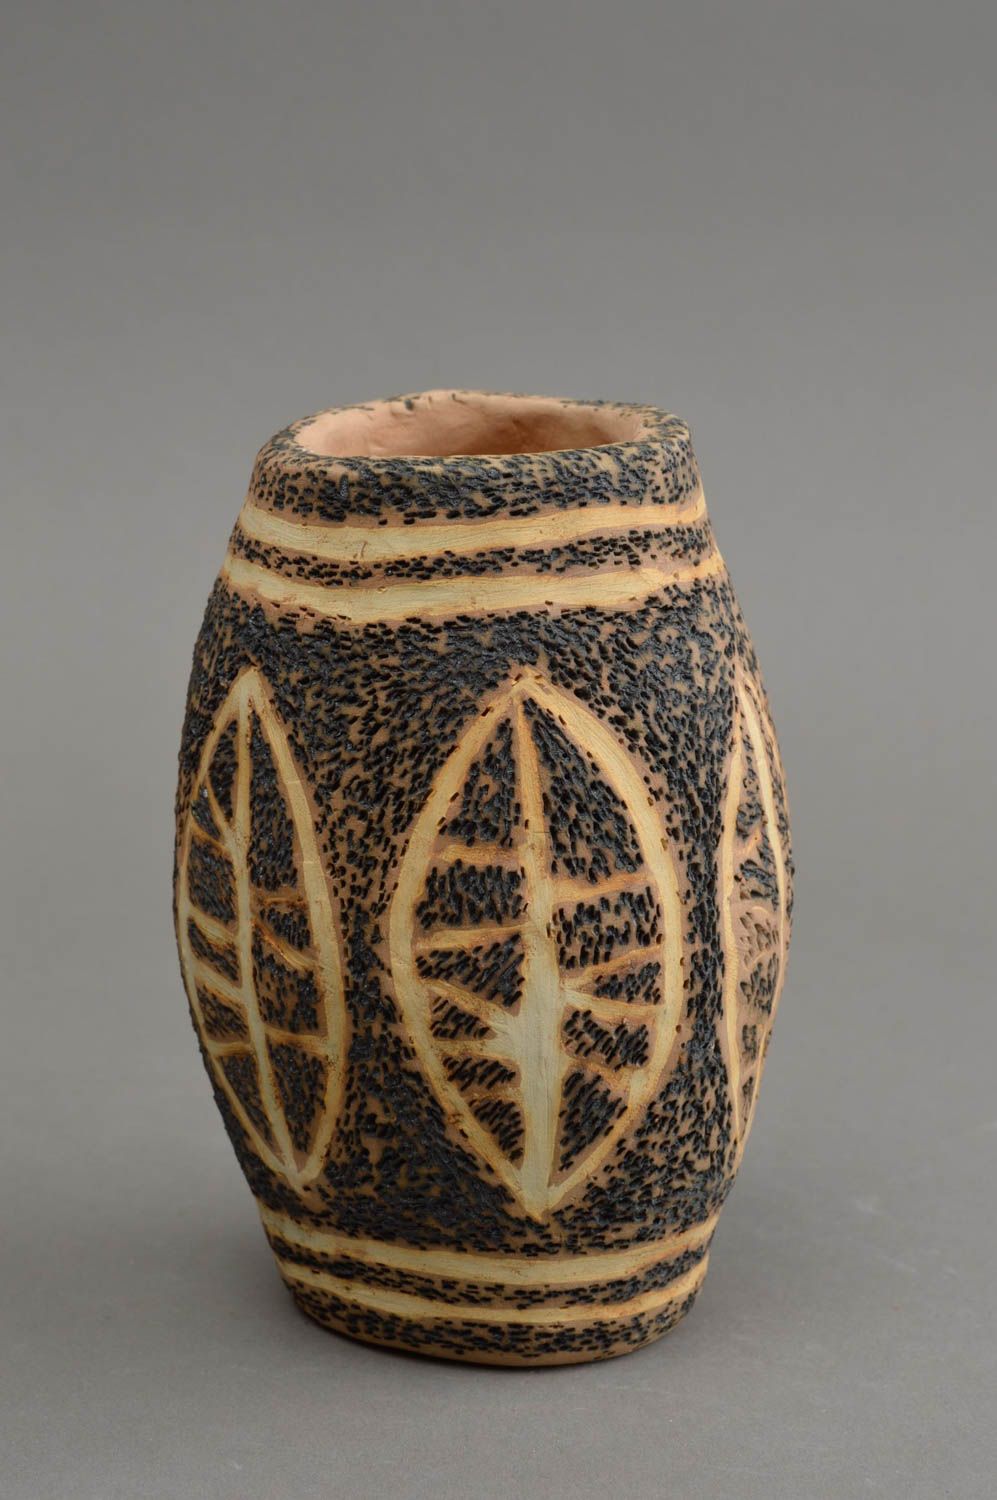 Originelle Miniatur Vase aus Ton mit Glasur bemalt handmade im Ethno Stil foto 5